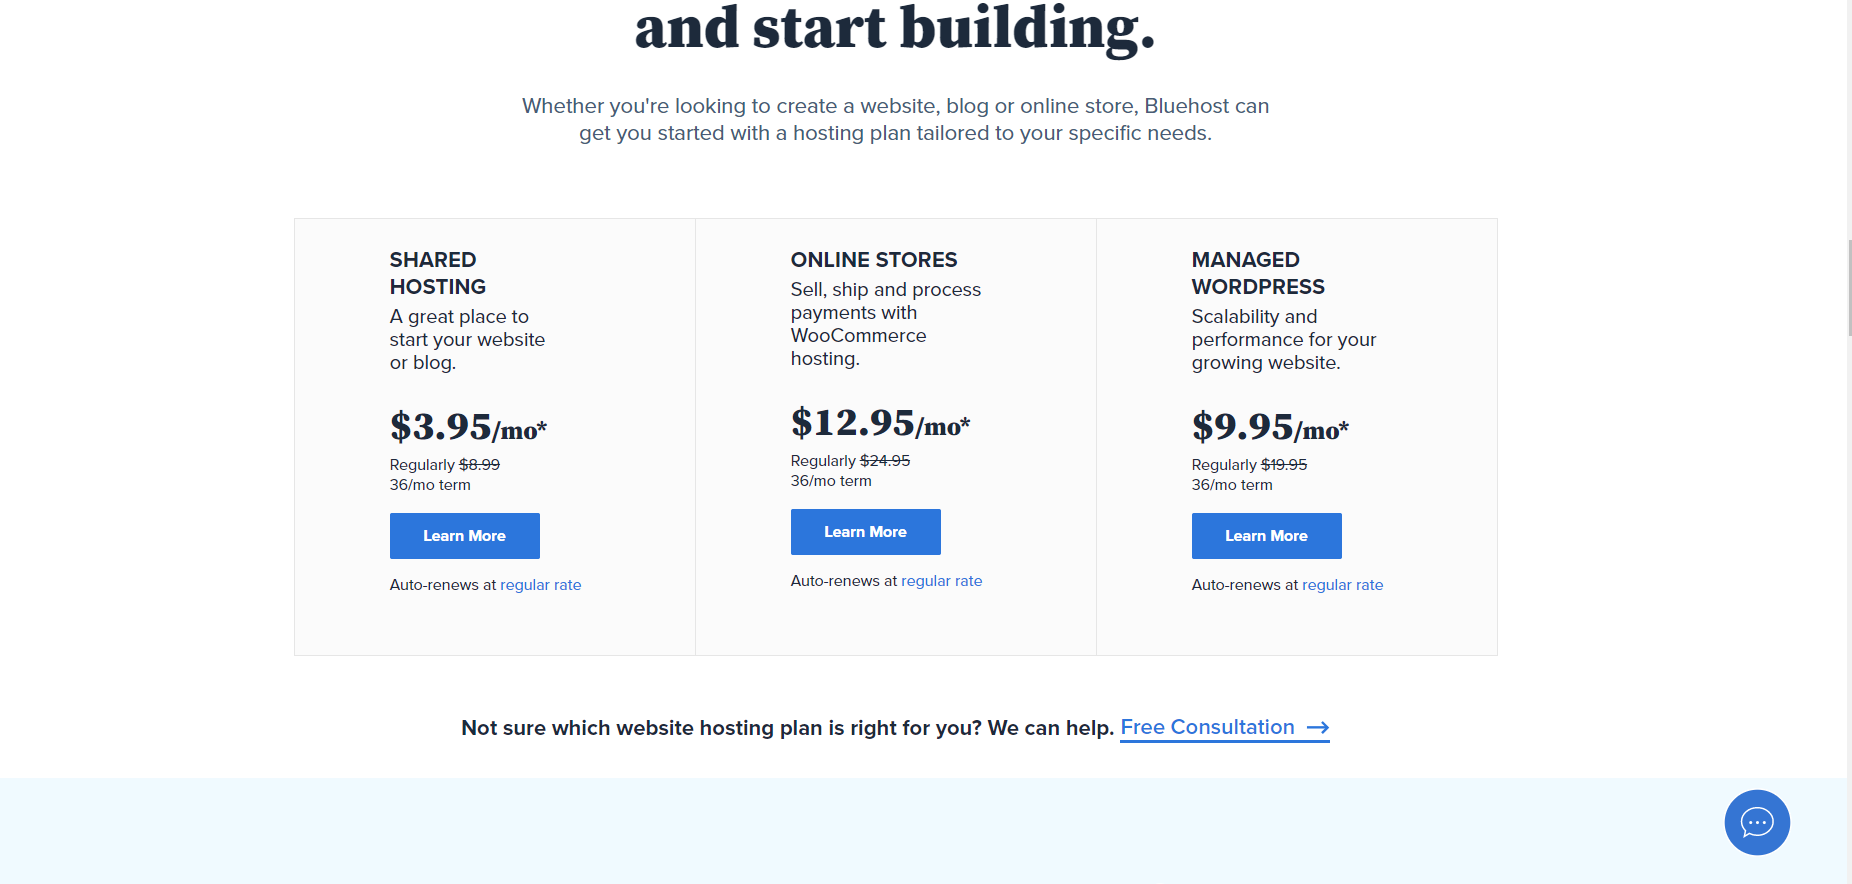 Bluehost shared hosting plans